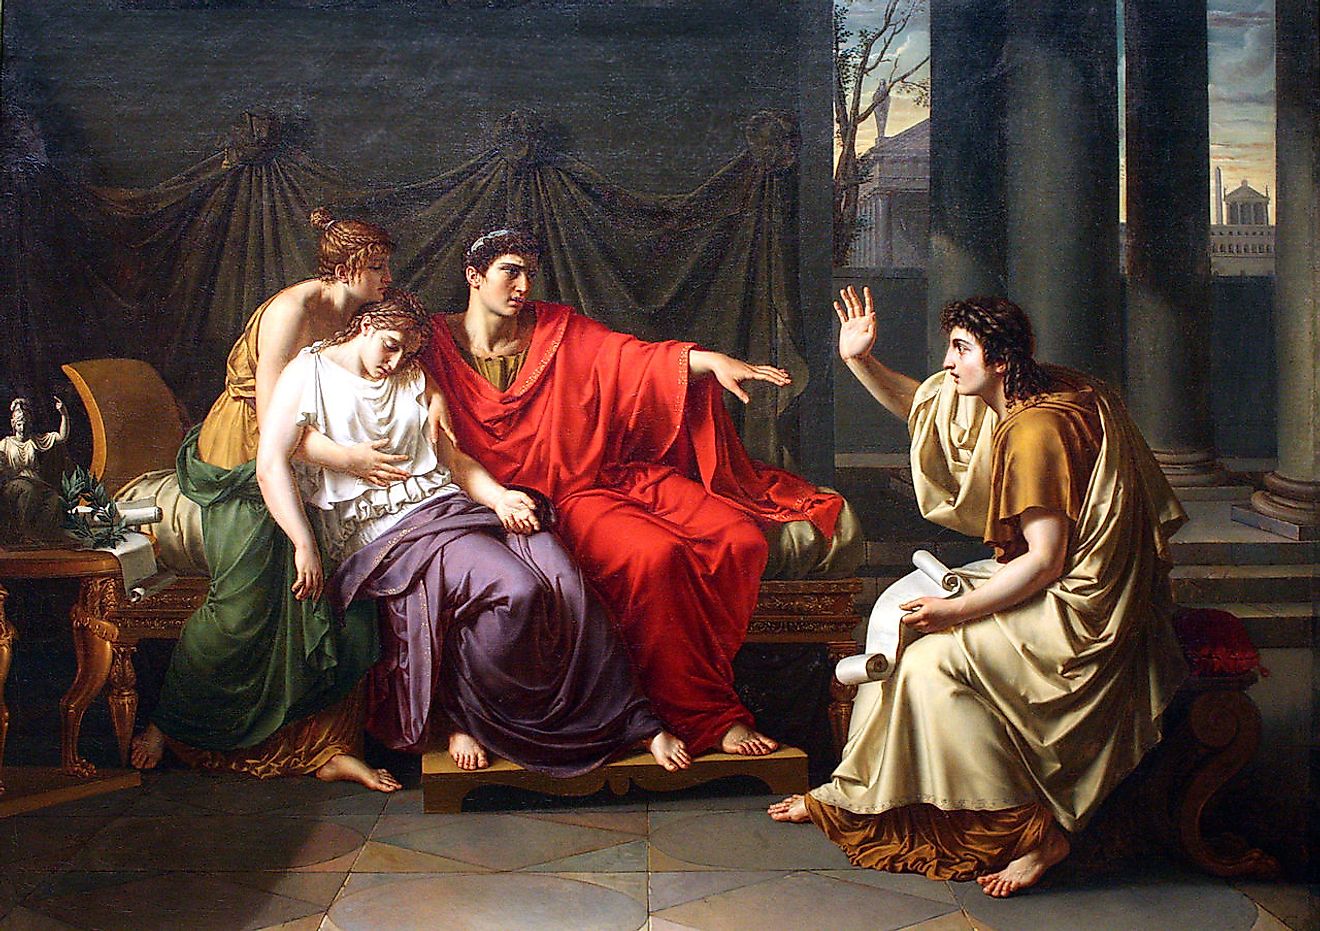 Virgil Reading the Aeneid to Augustus, Octavia, and Livia by Jean-Baptiste Wicar, Art Institute of Chicago. Image credit: Jean-Baptiste Wicar/Public domain